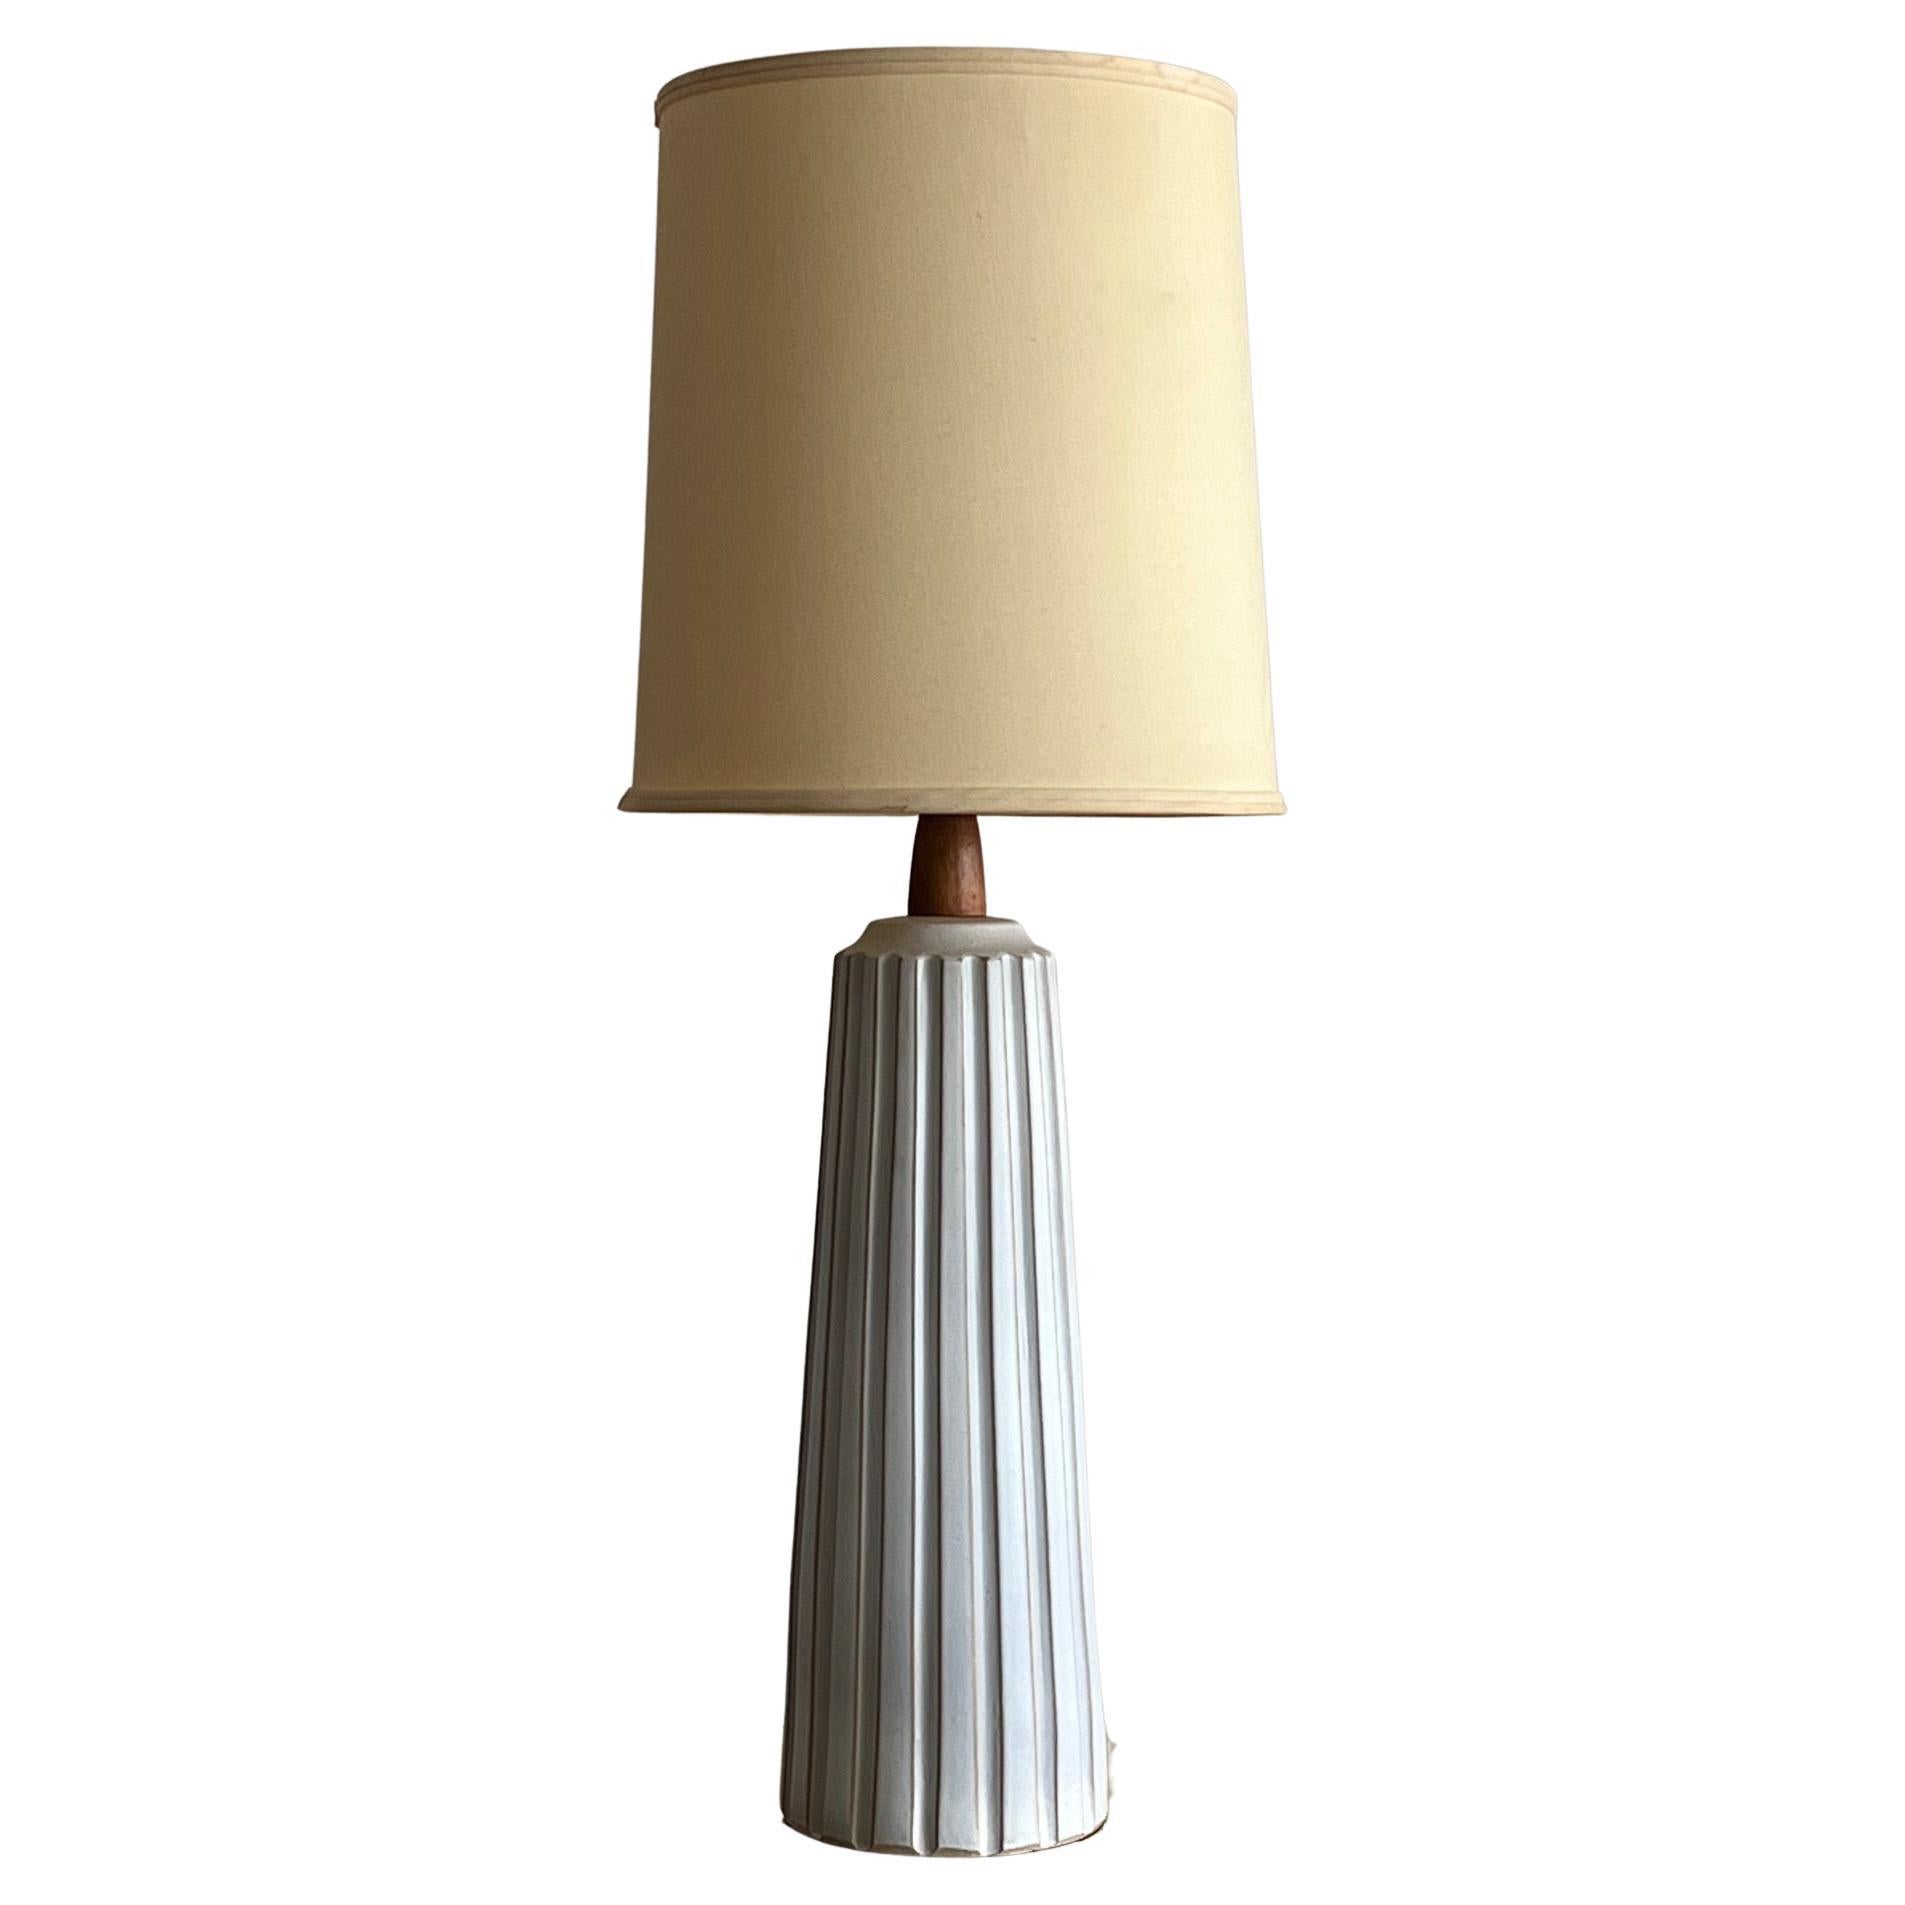 White Architectural Lamp by Gordon Martz Marshall Studios For Sale